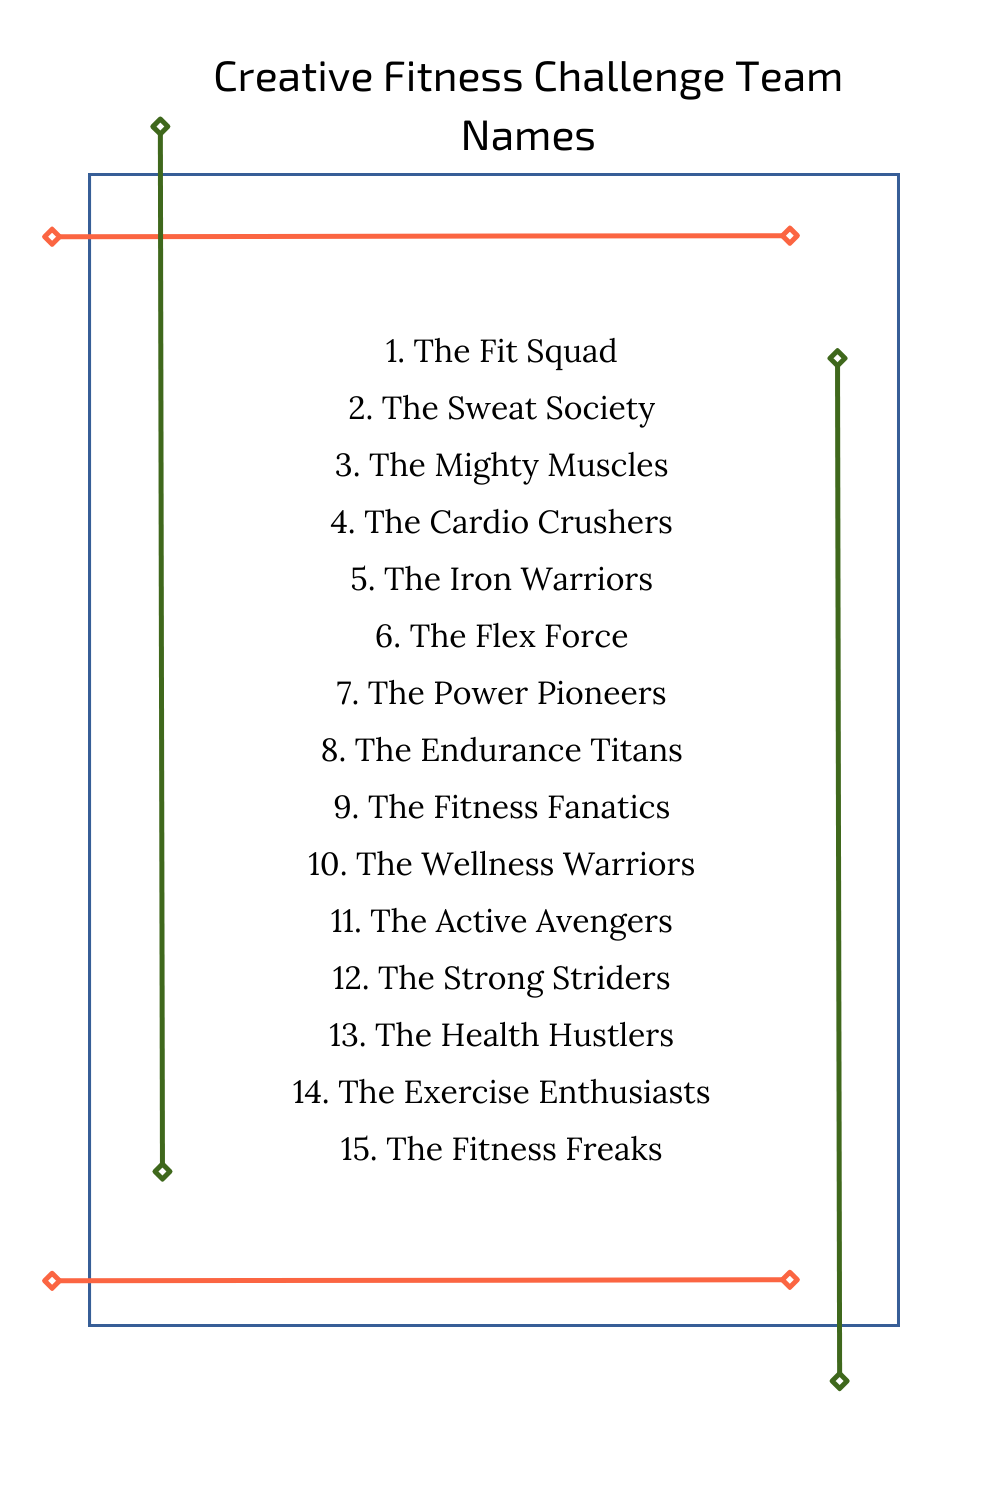 Creative Fitness Challenge Team Names